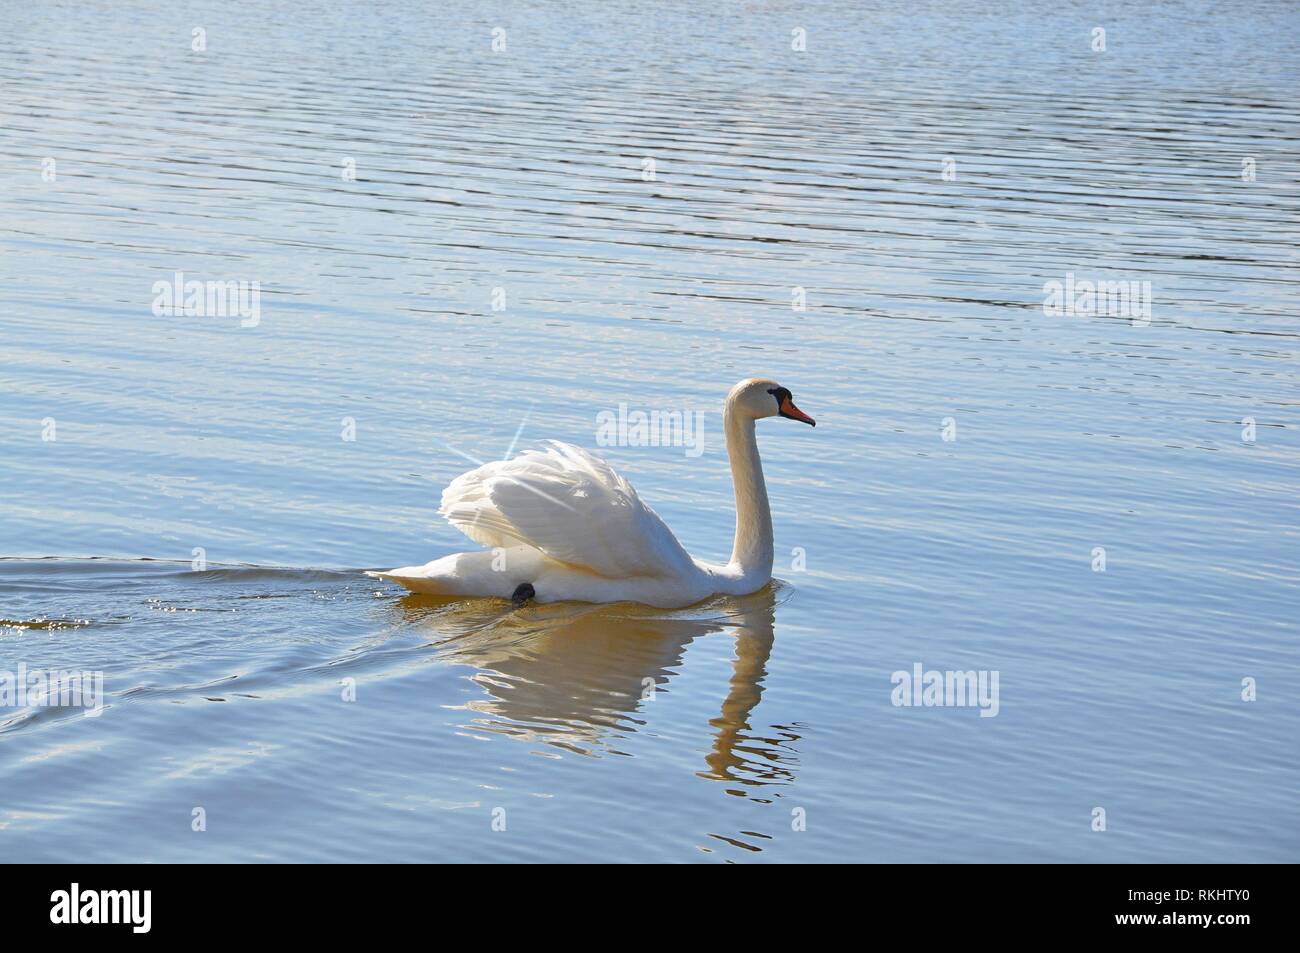 White swan in starry sunshine swimming in blue water on Lake Malaren, Stockholm, Sweden. Stock Photo